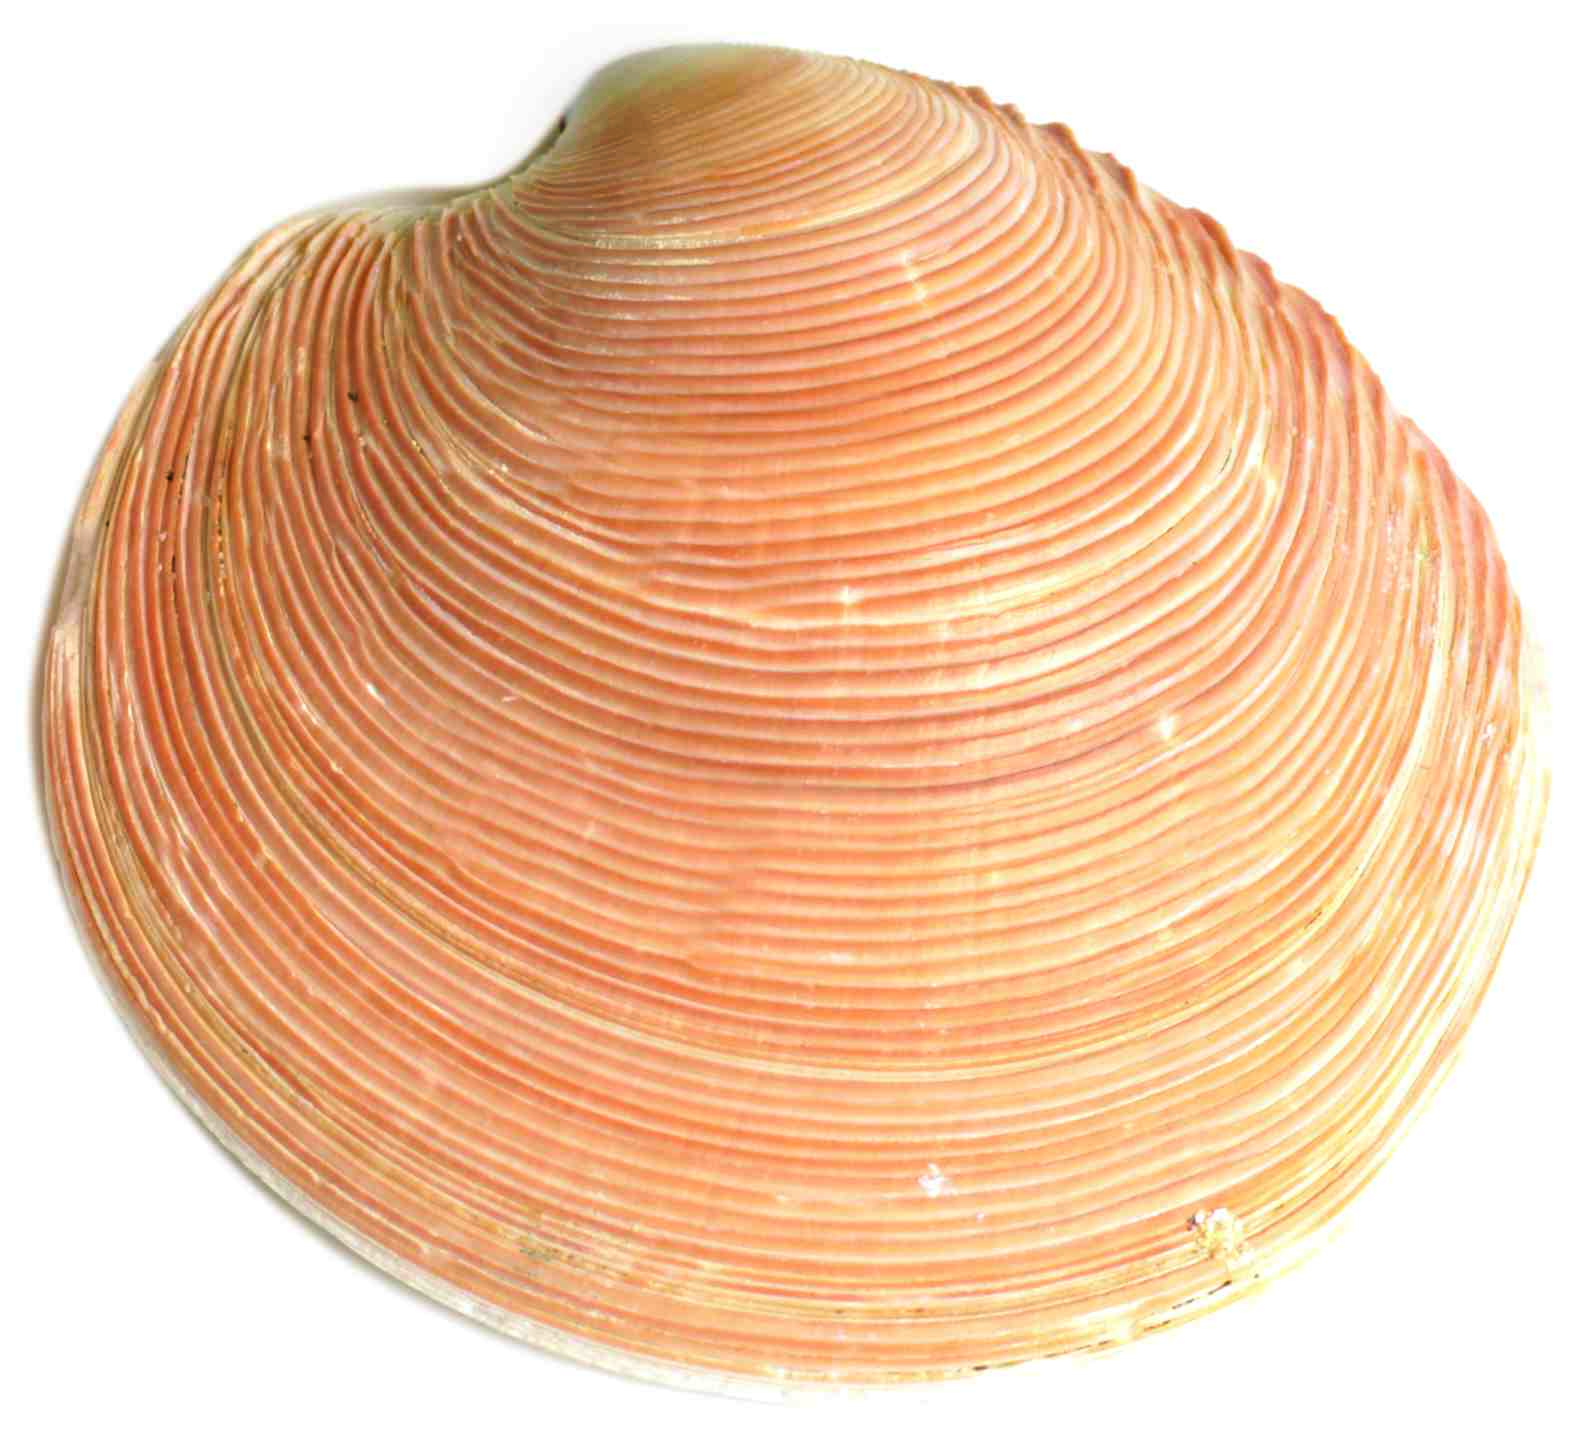 Venus clam - southern